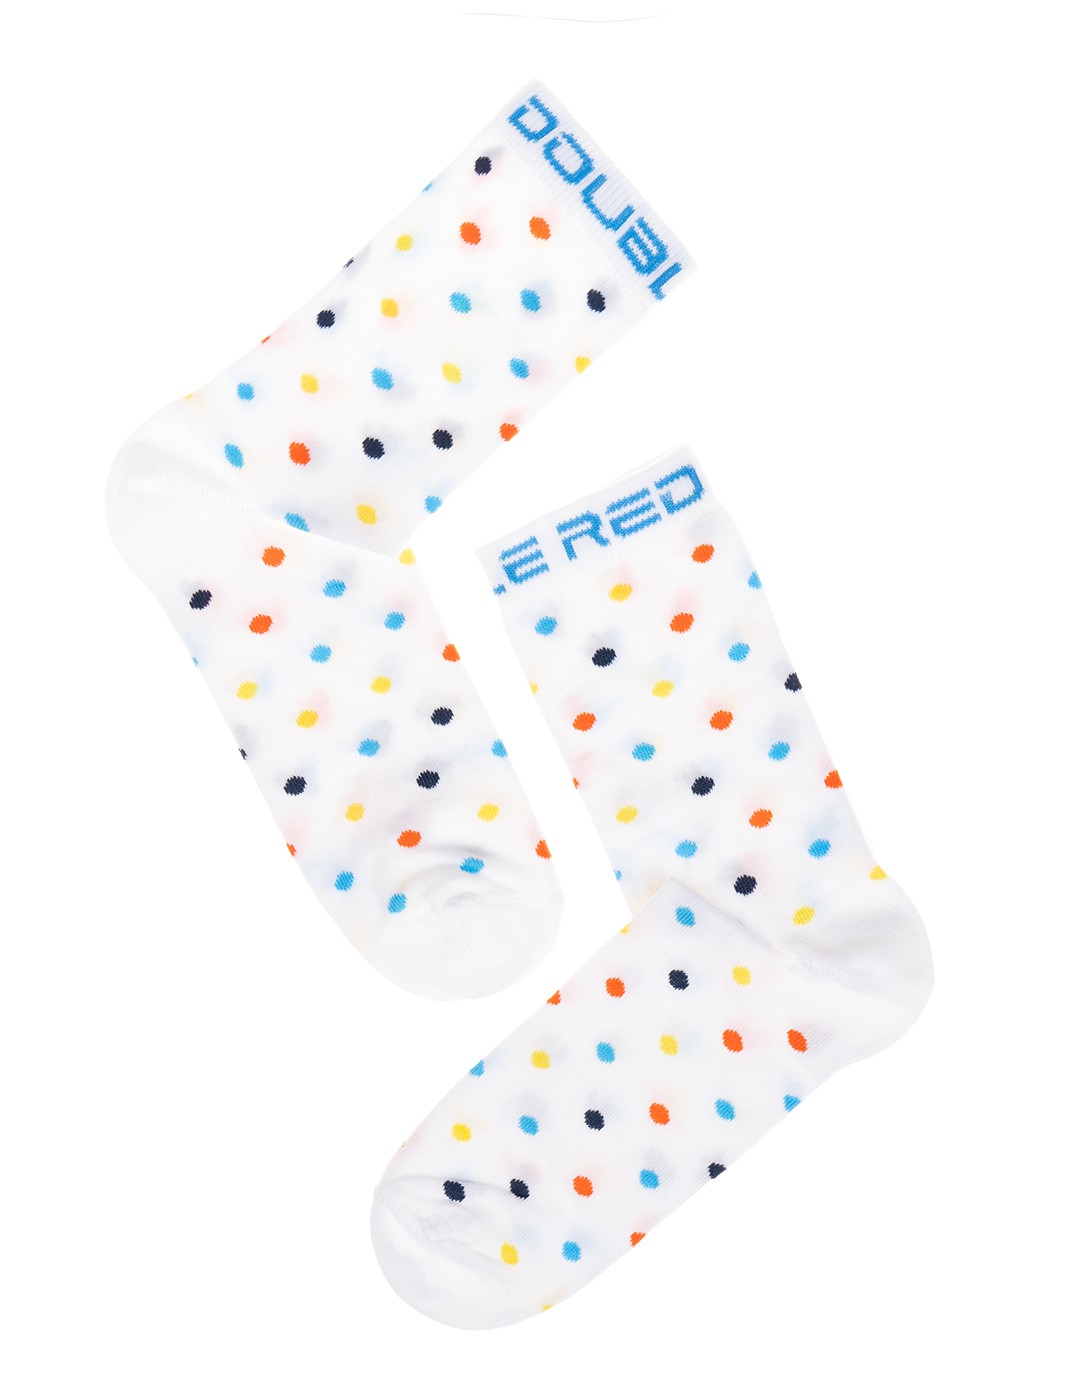 DOUBLE FUN Socks Colorful Dots